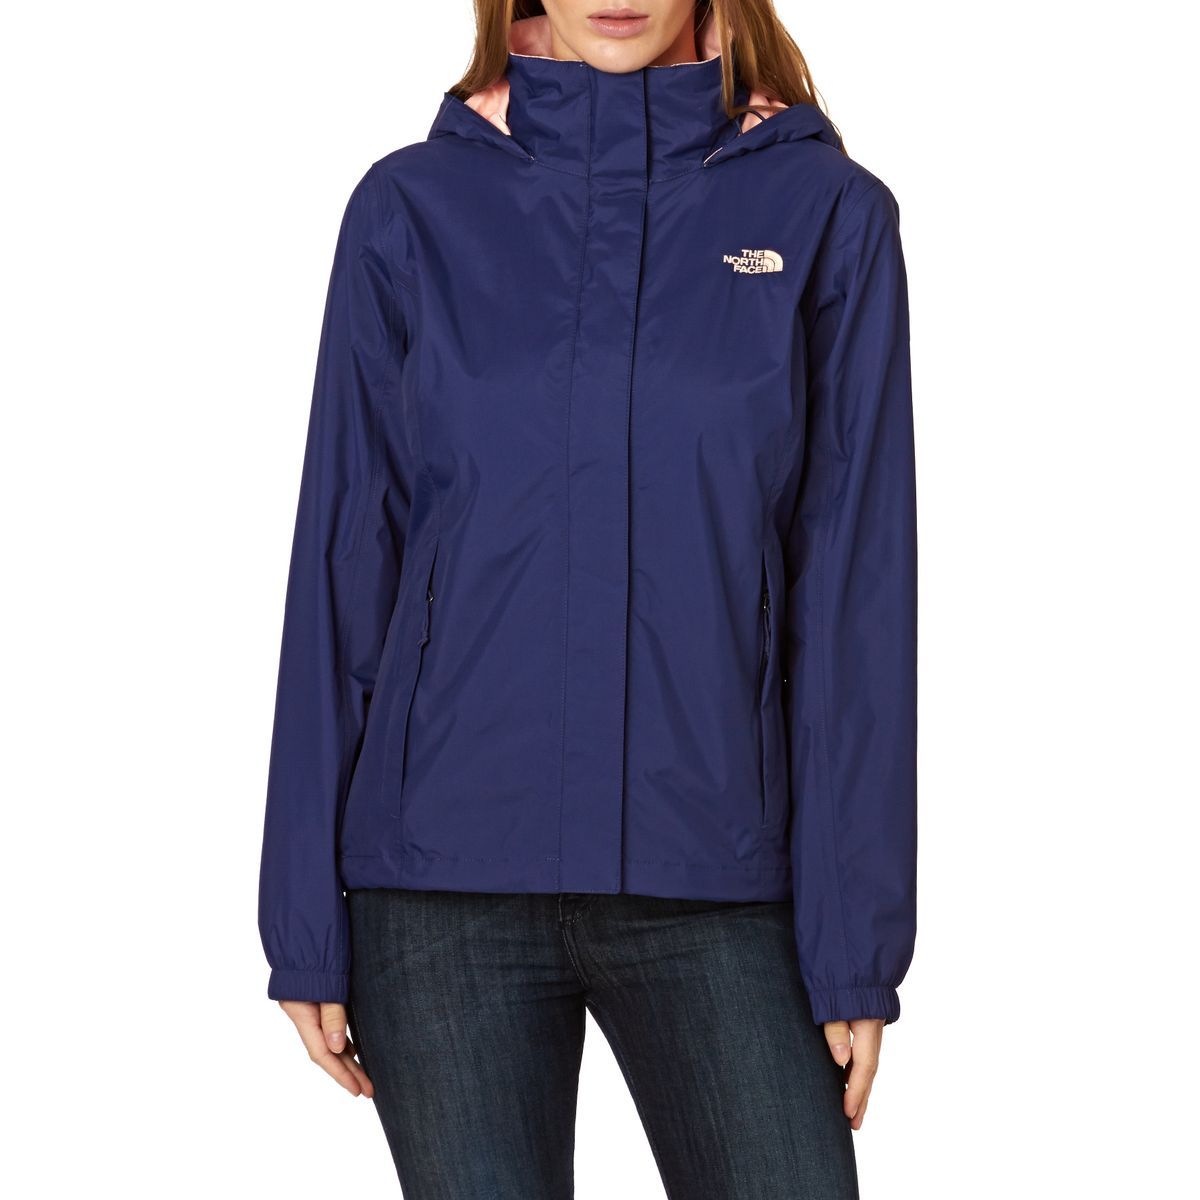 The North Face Womens Resolve Waterproof Jacket - Blue | eBay